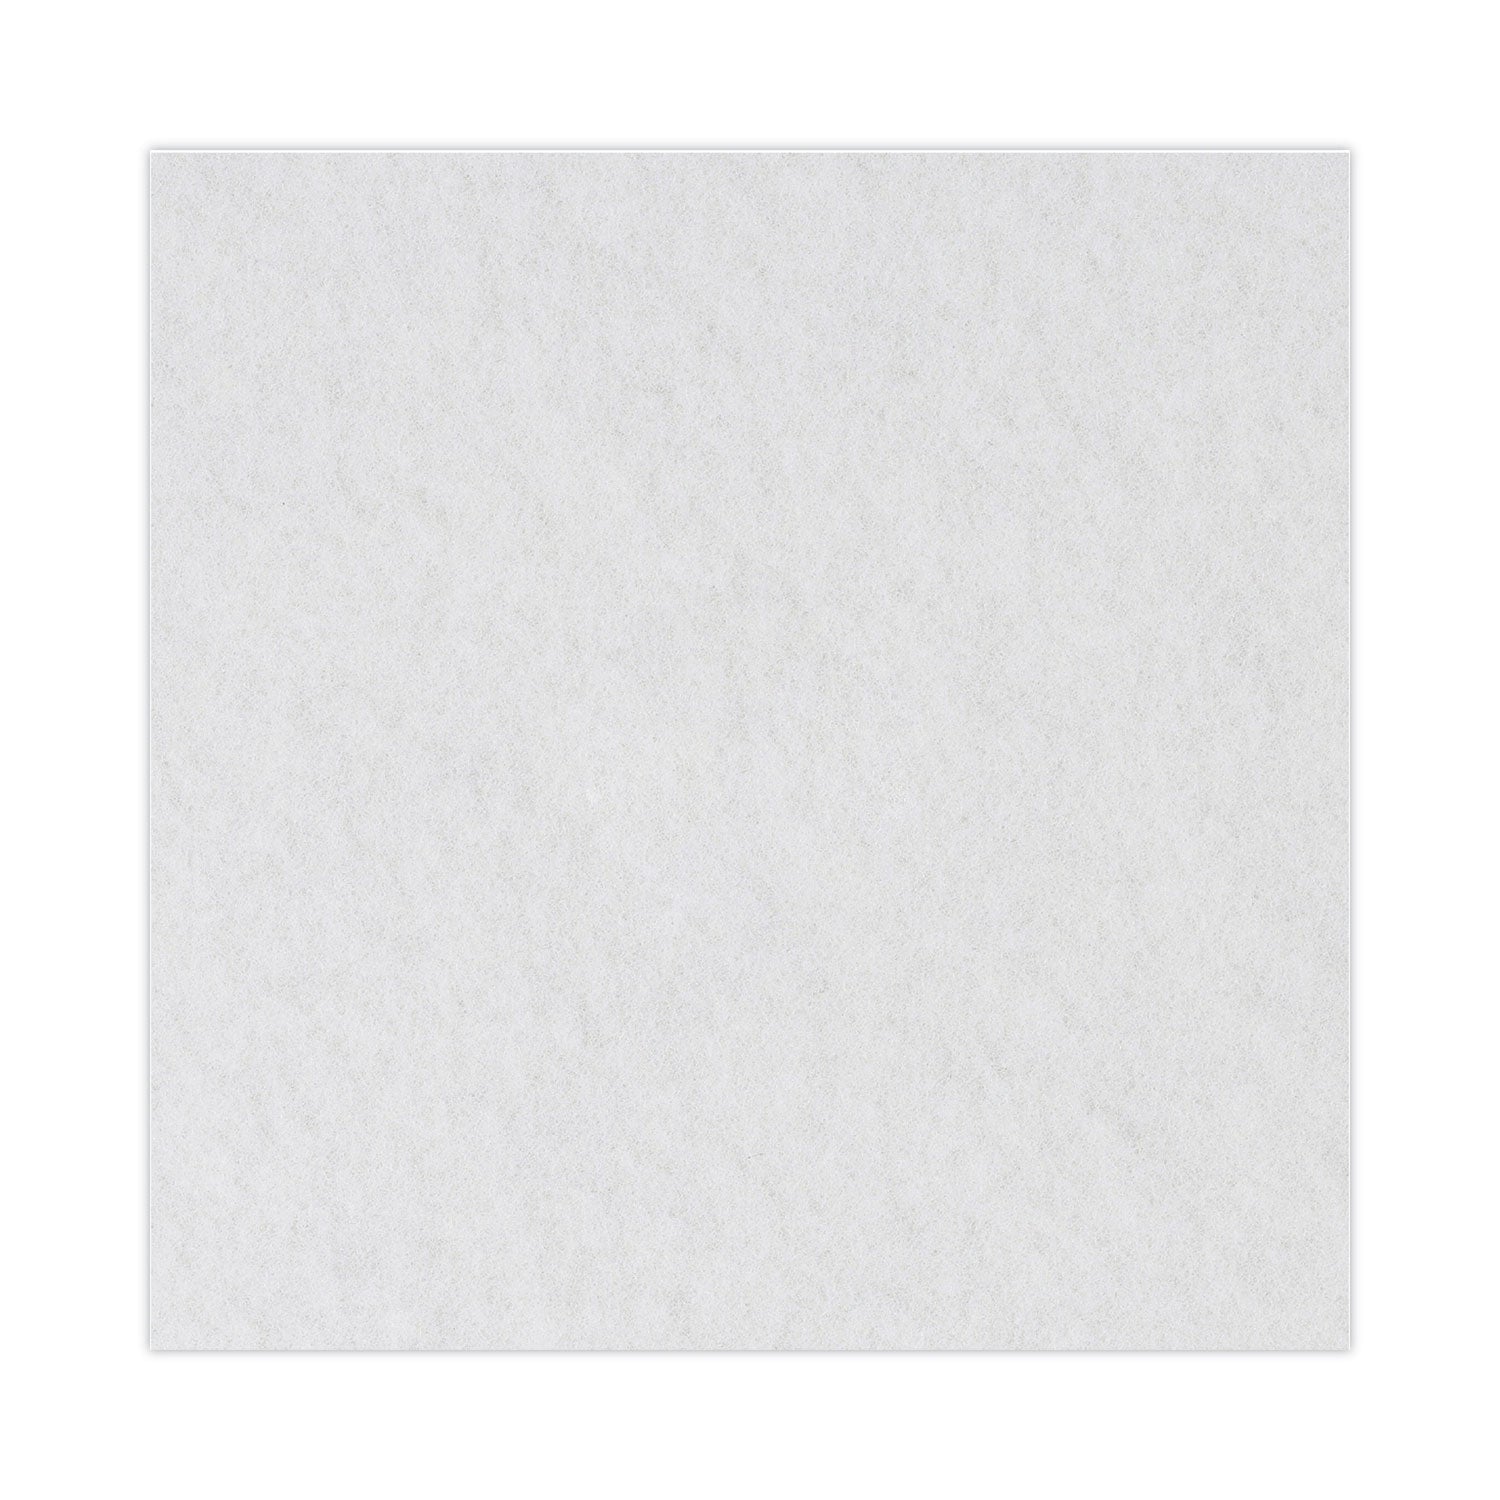 polishing-floor-pads-24-diameter-white-5-carton_bwk4024whi - 6